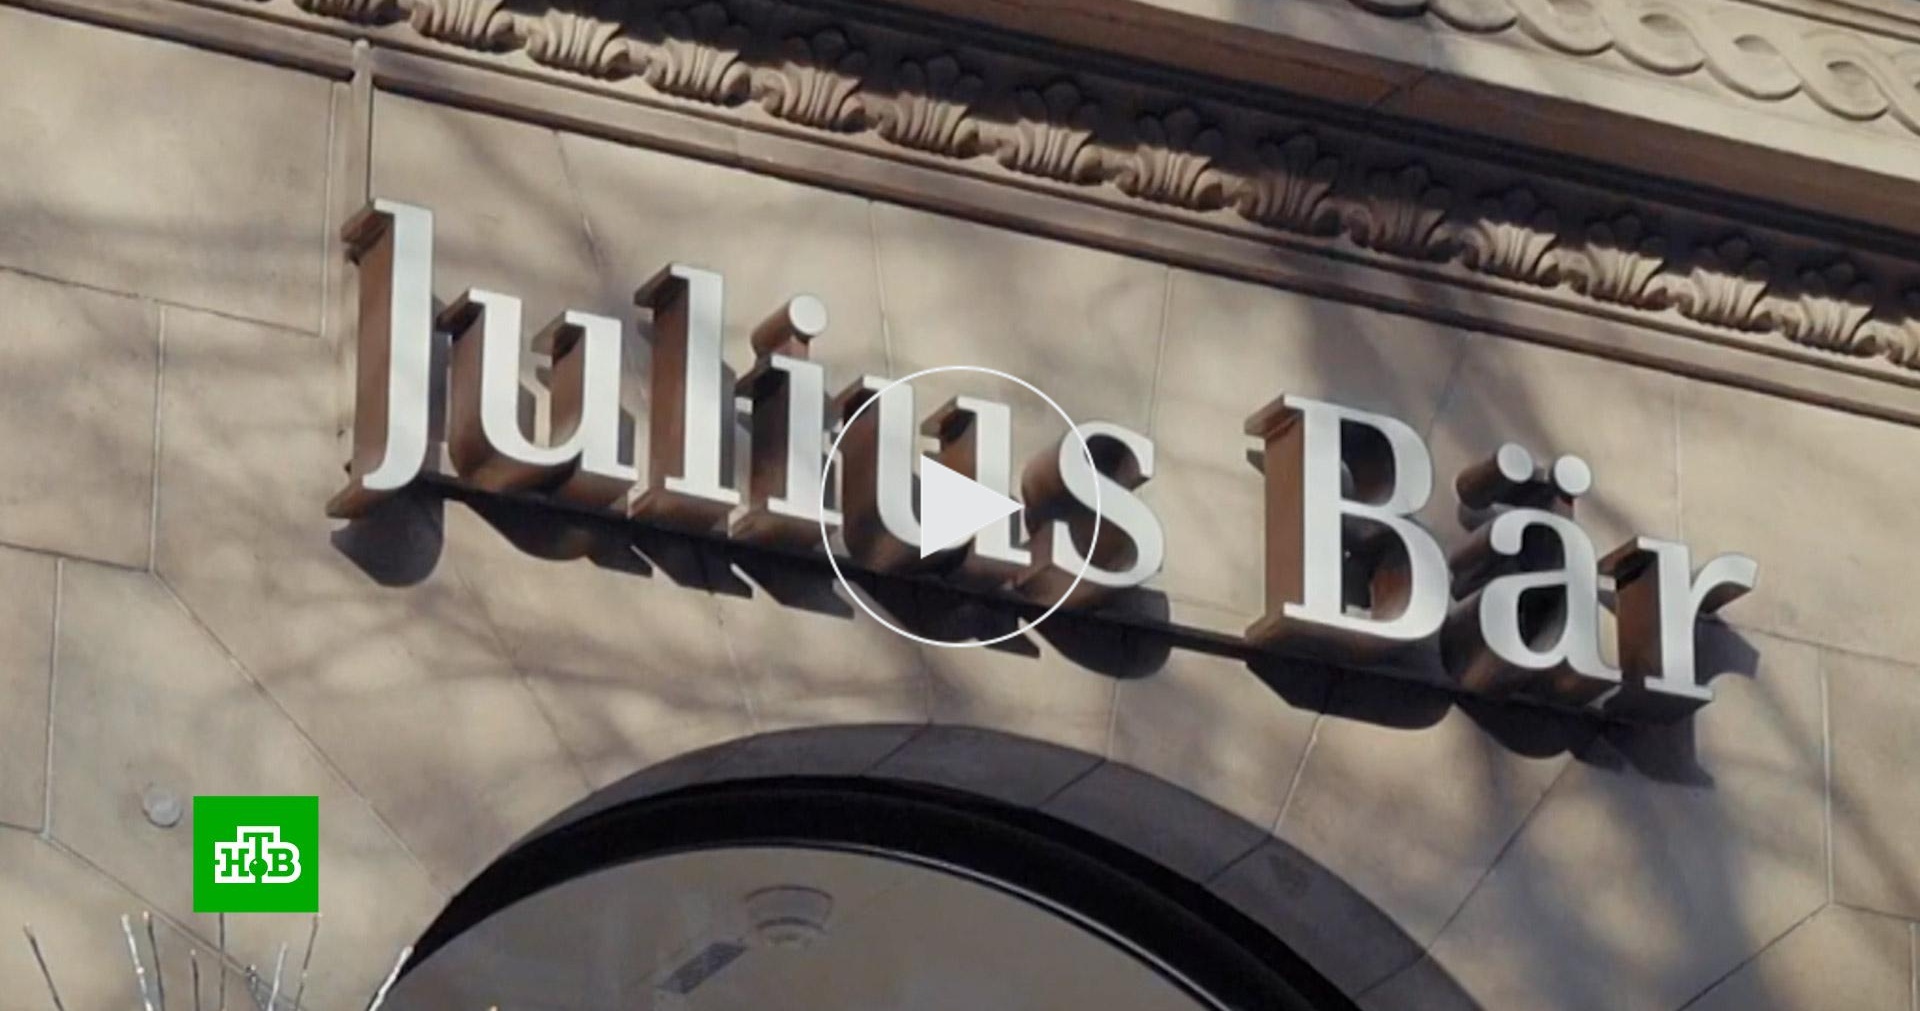 Швейцарский банк. Швейцарский банк женщины. Julius Baer. Julius Bär банк логотип.